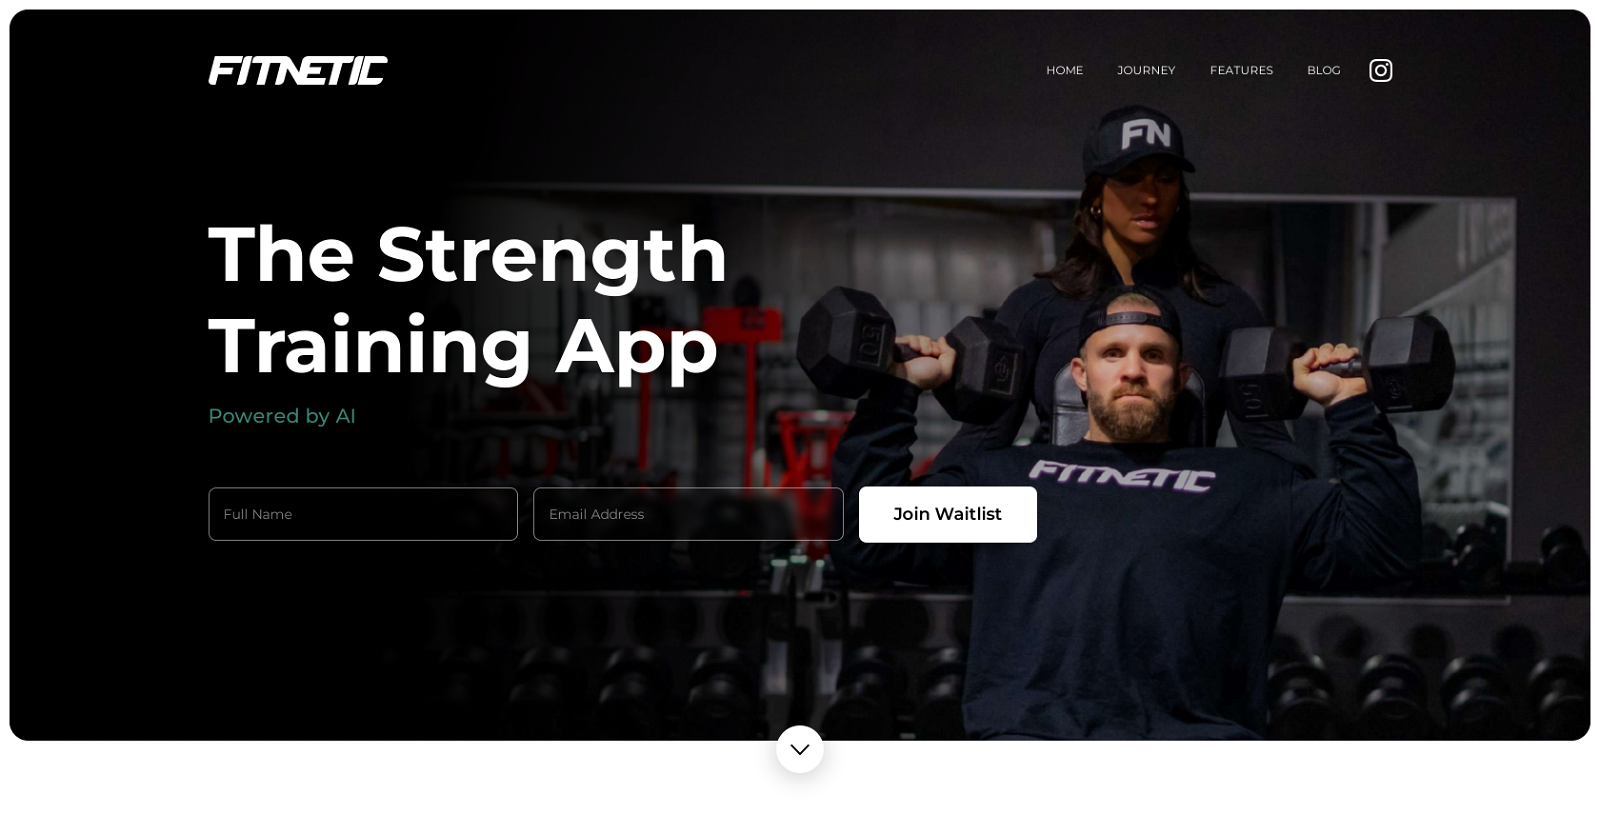 Fitnetic website